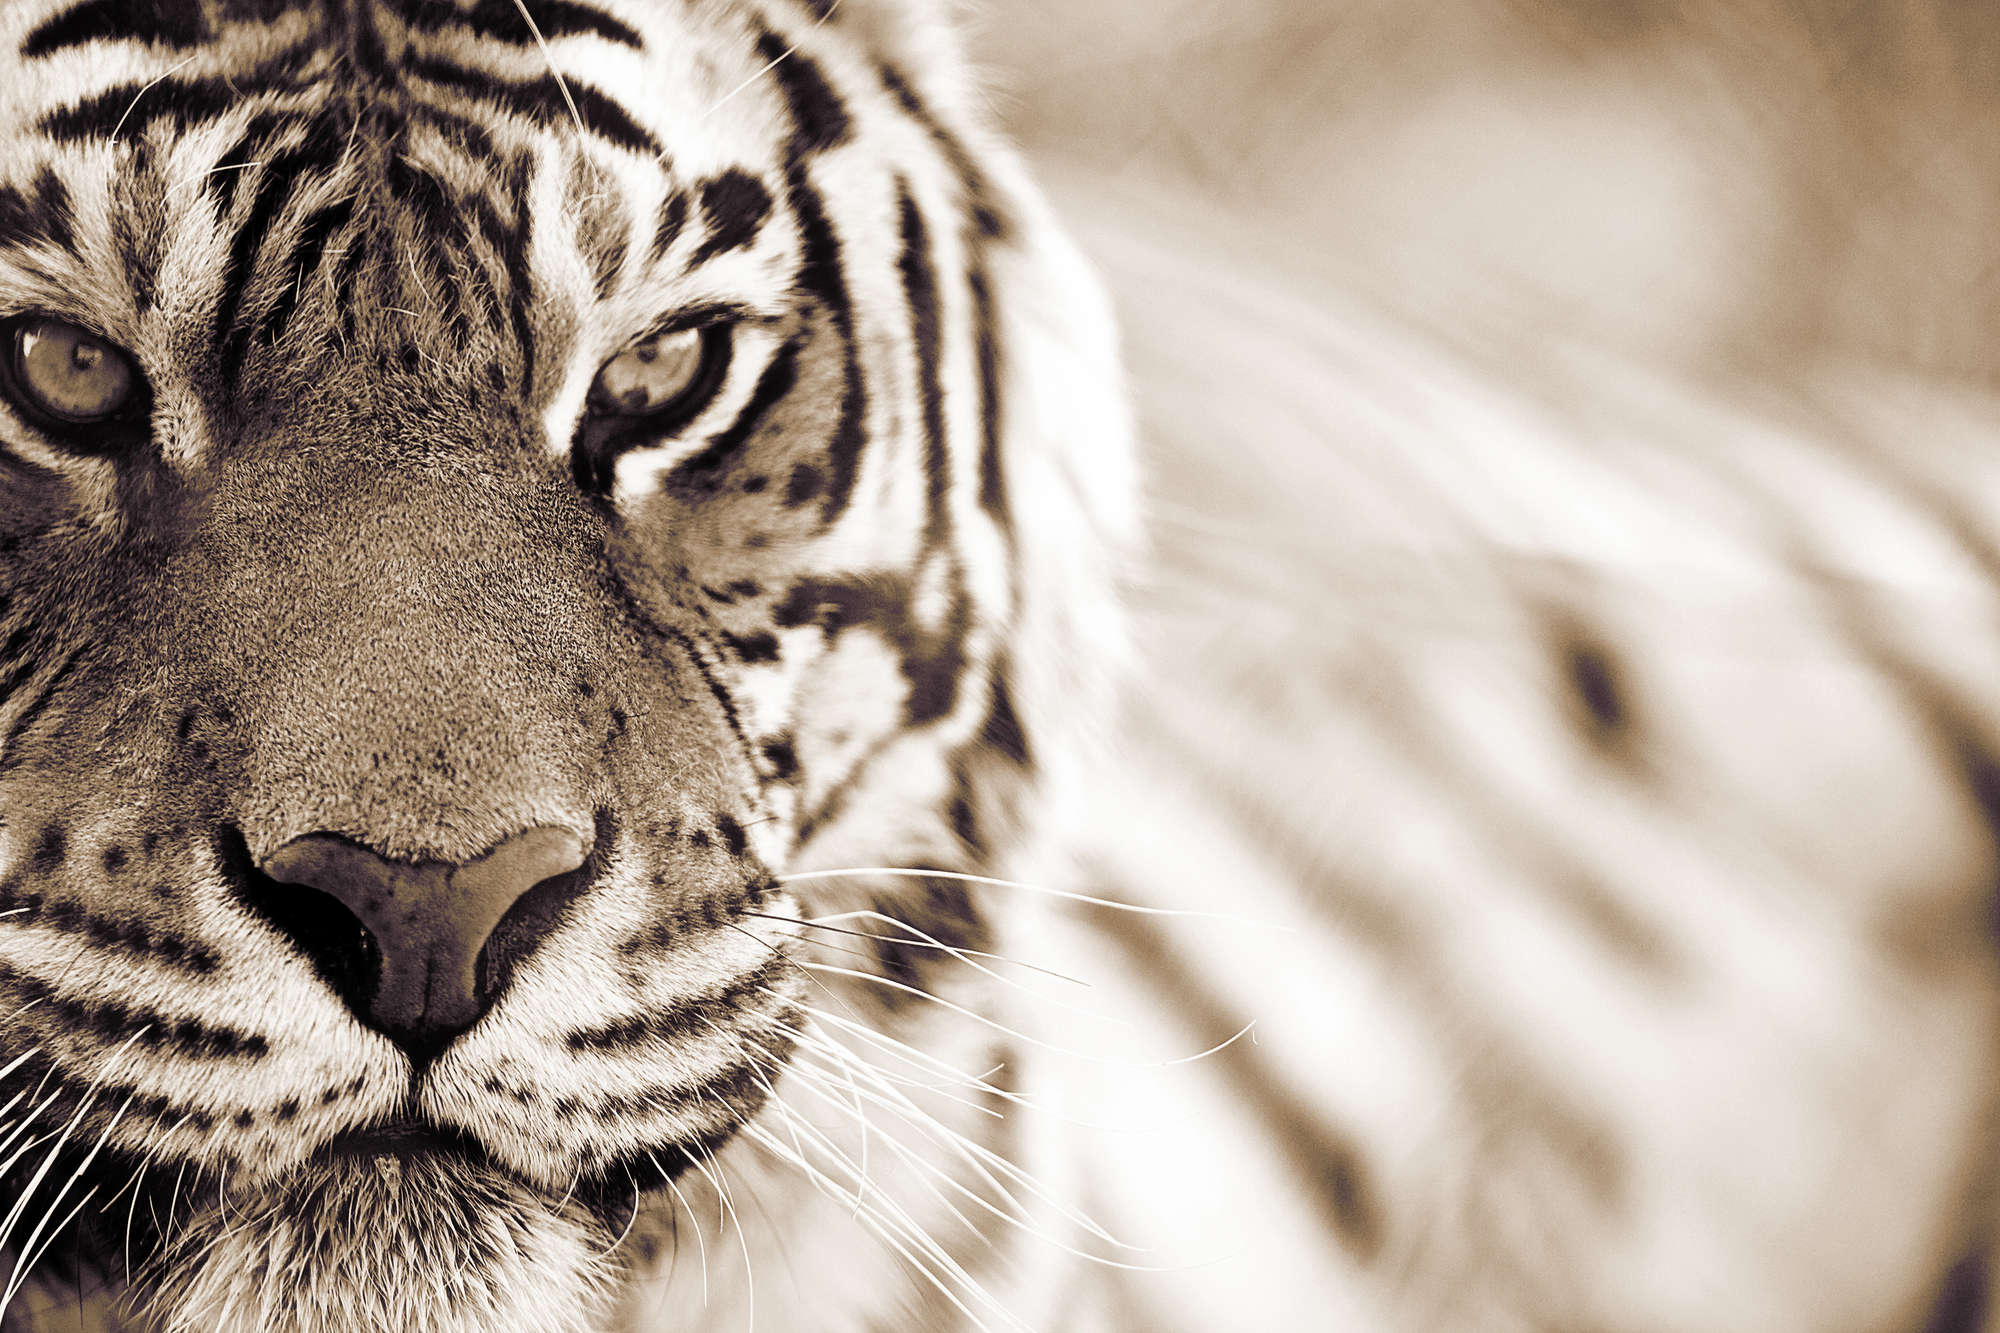             Tiger Fototapete Nahaufnahme im Freien auf Premium Glattvlies
        